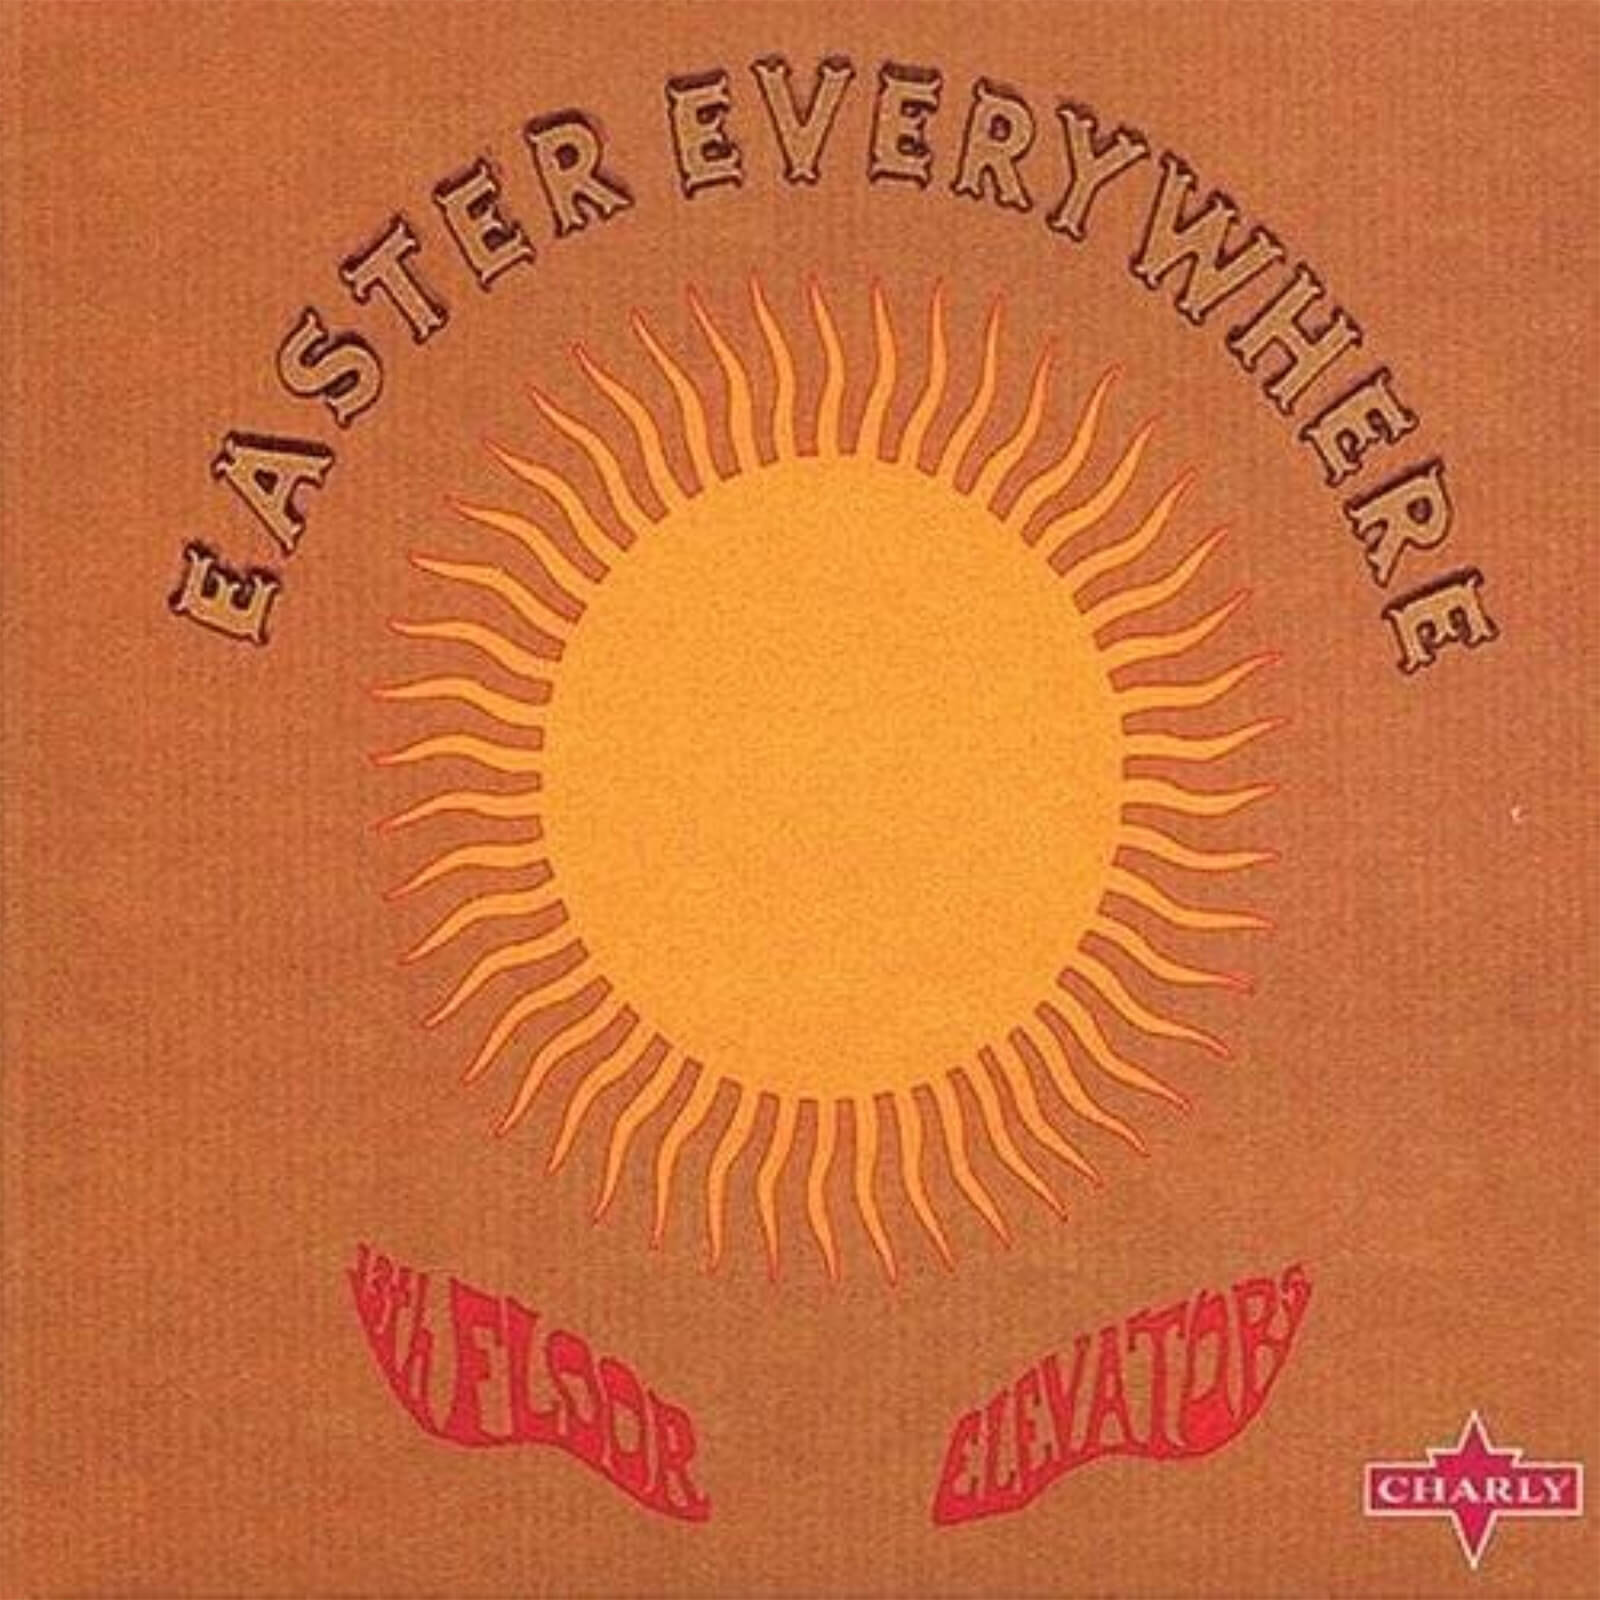 The 13th Floor Elevators - Easter Everywhere Vinyl 2LP (Yellow & Red)